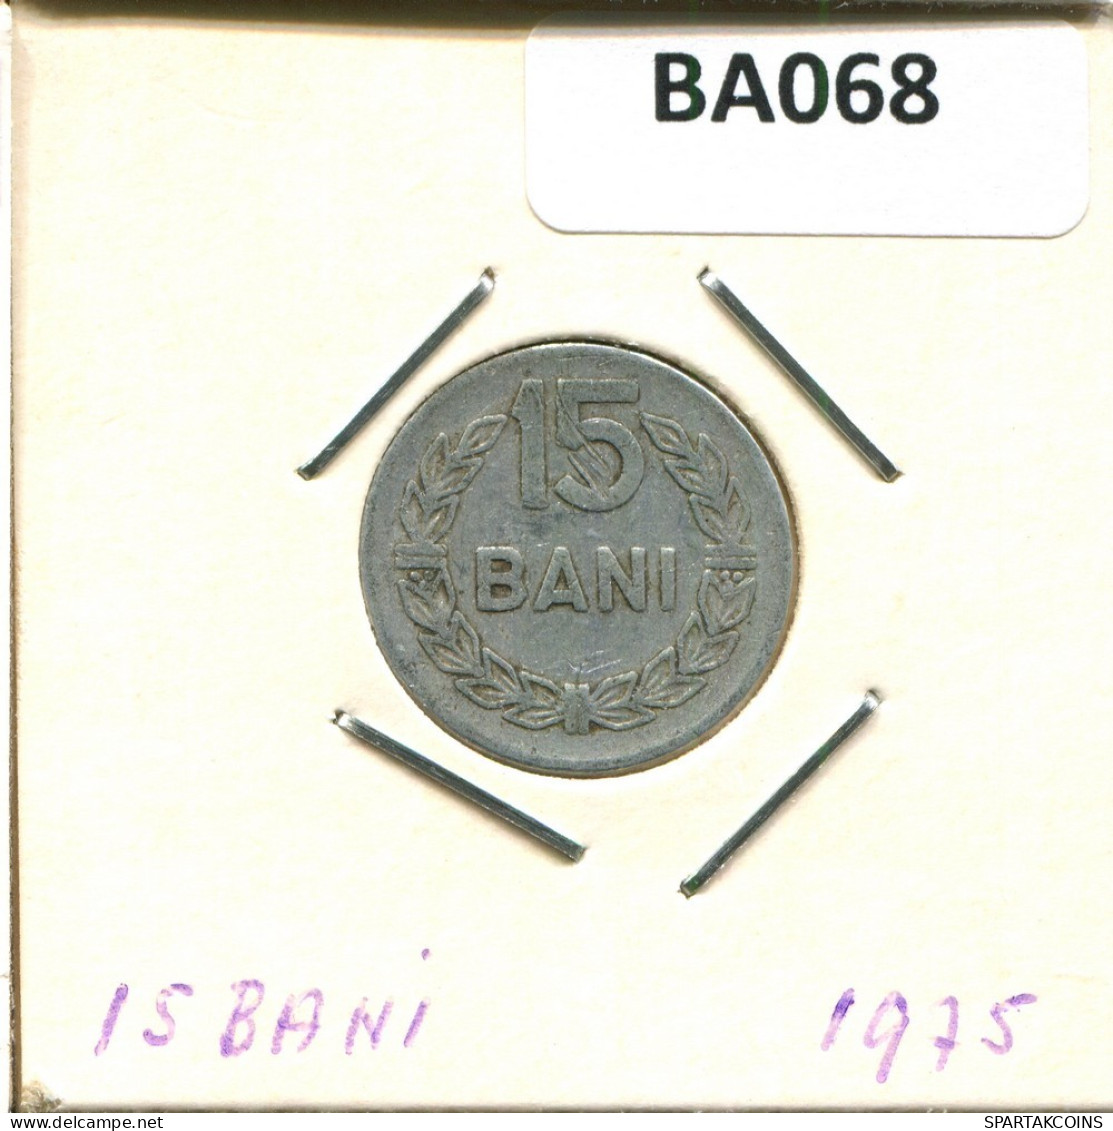 15 BANI 1975 RUMÄNIEN ROMANIA Münze #BA068.D.A - Rumania